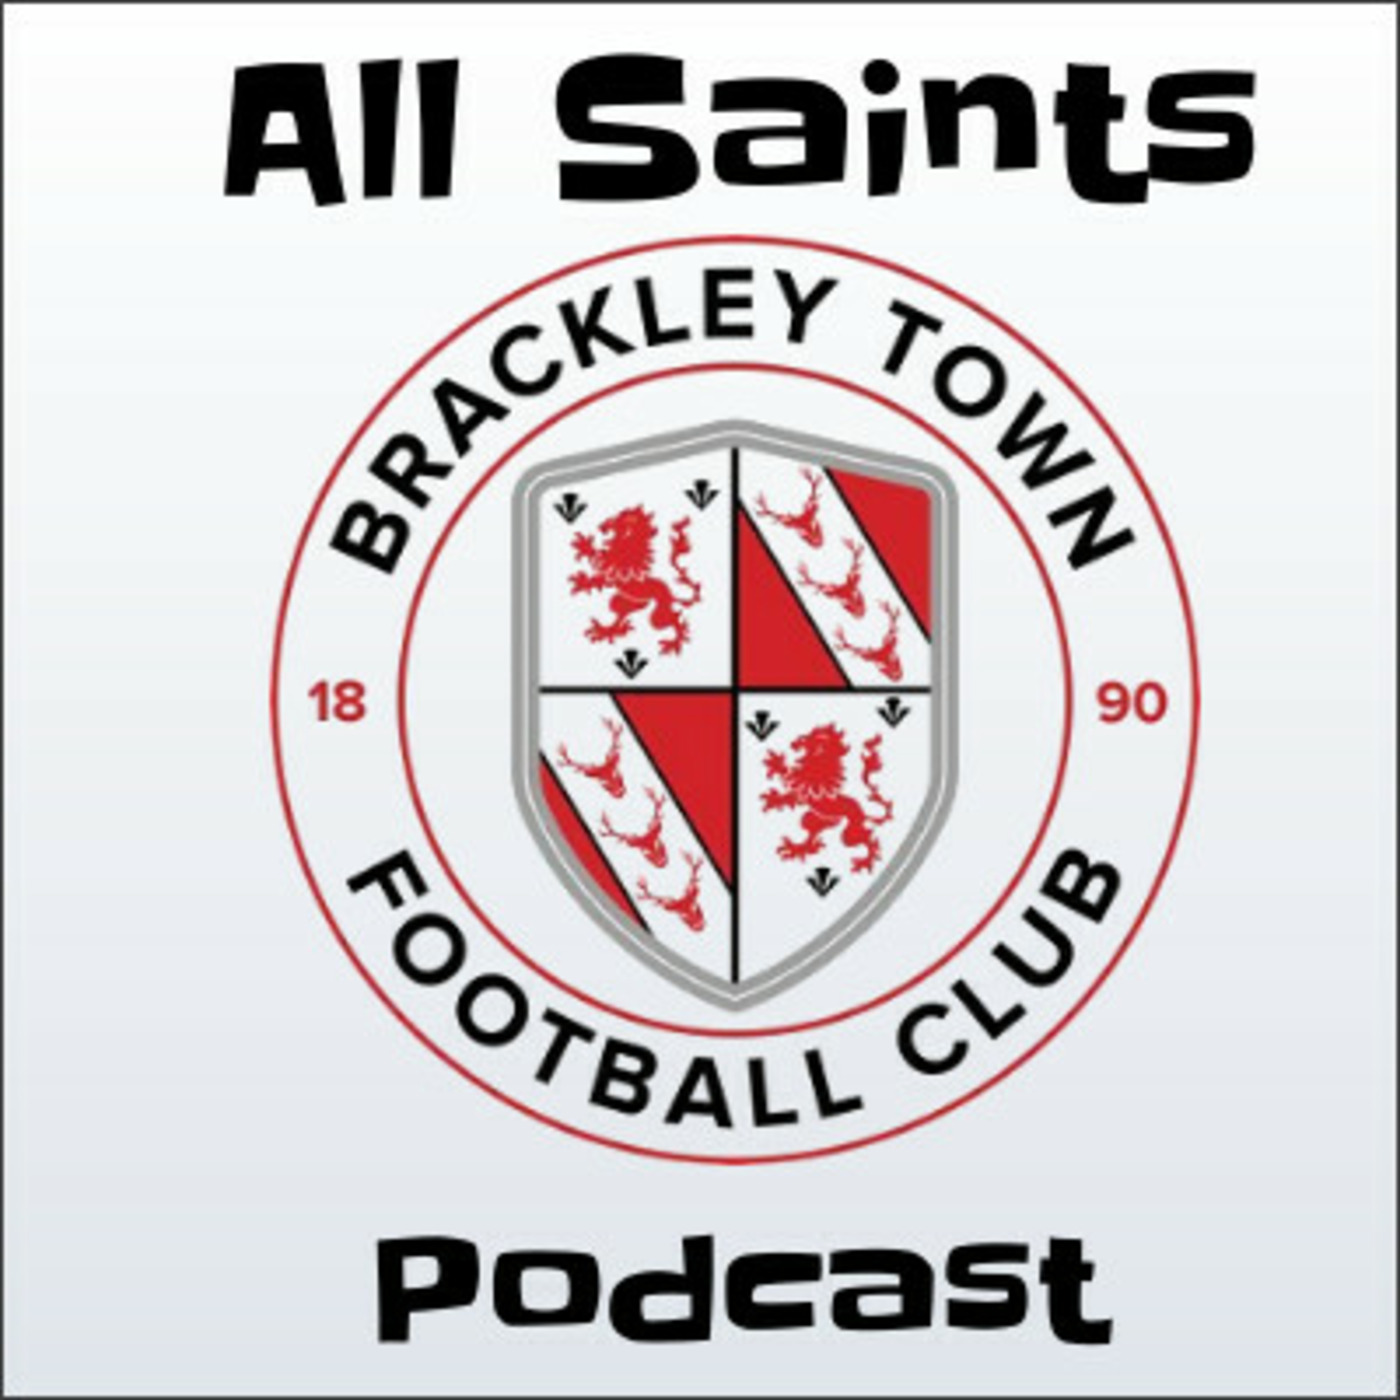 Episode 37: All saints podcast 68